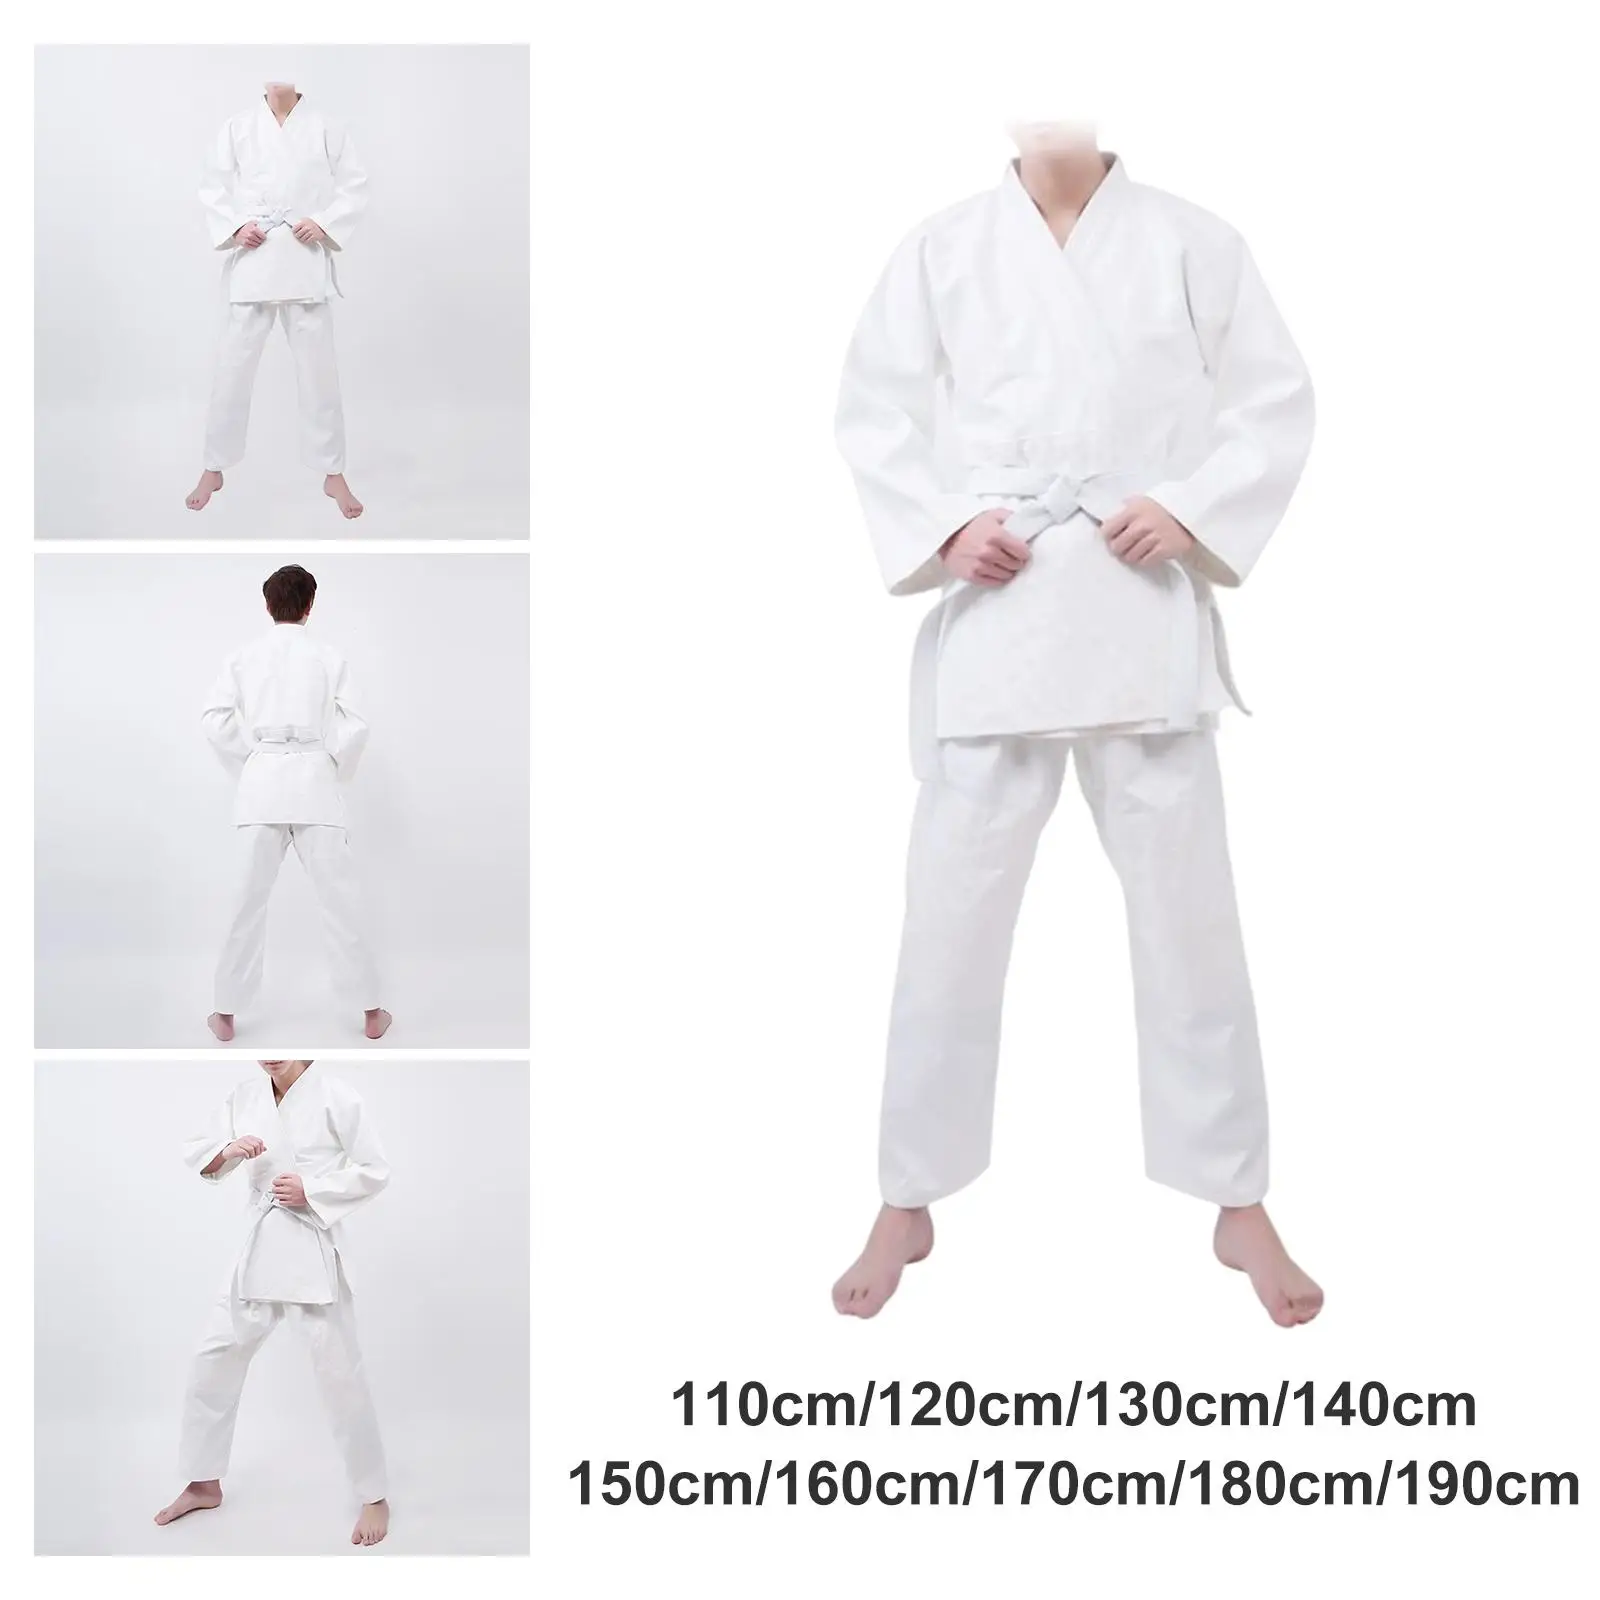 Traditional Judo Gi Uniform Long Sleeve Clothing Costume White Belt Performance for Women Adults Children Beginners Training